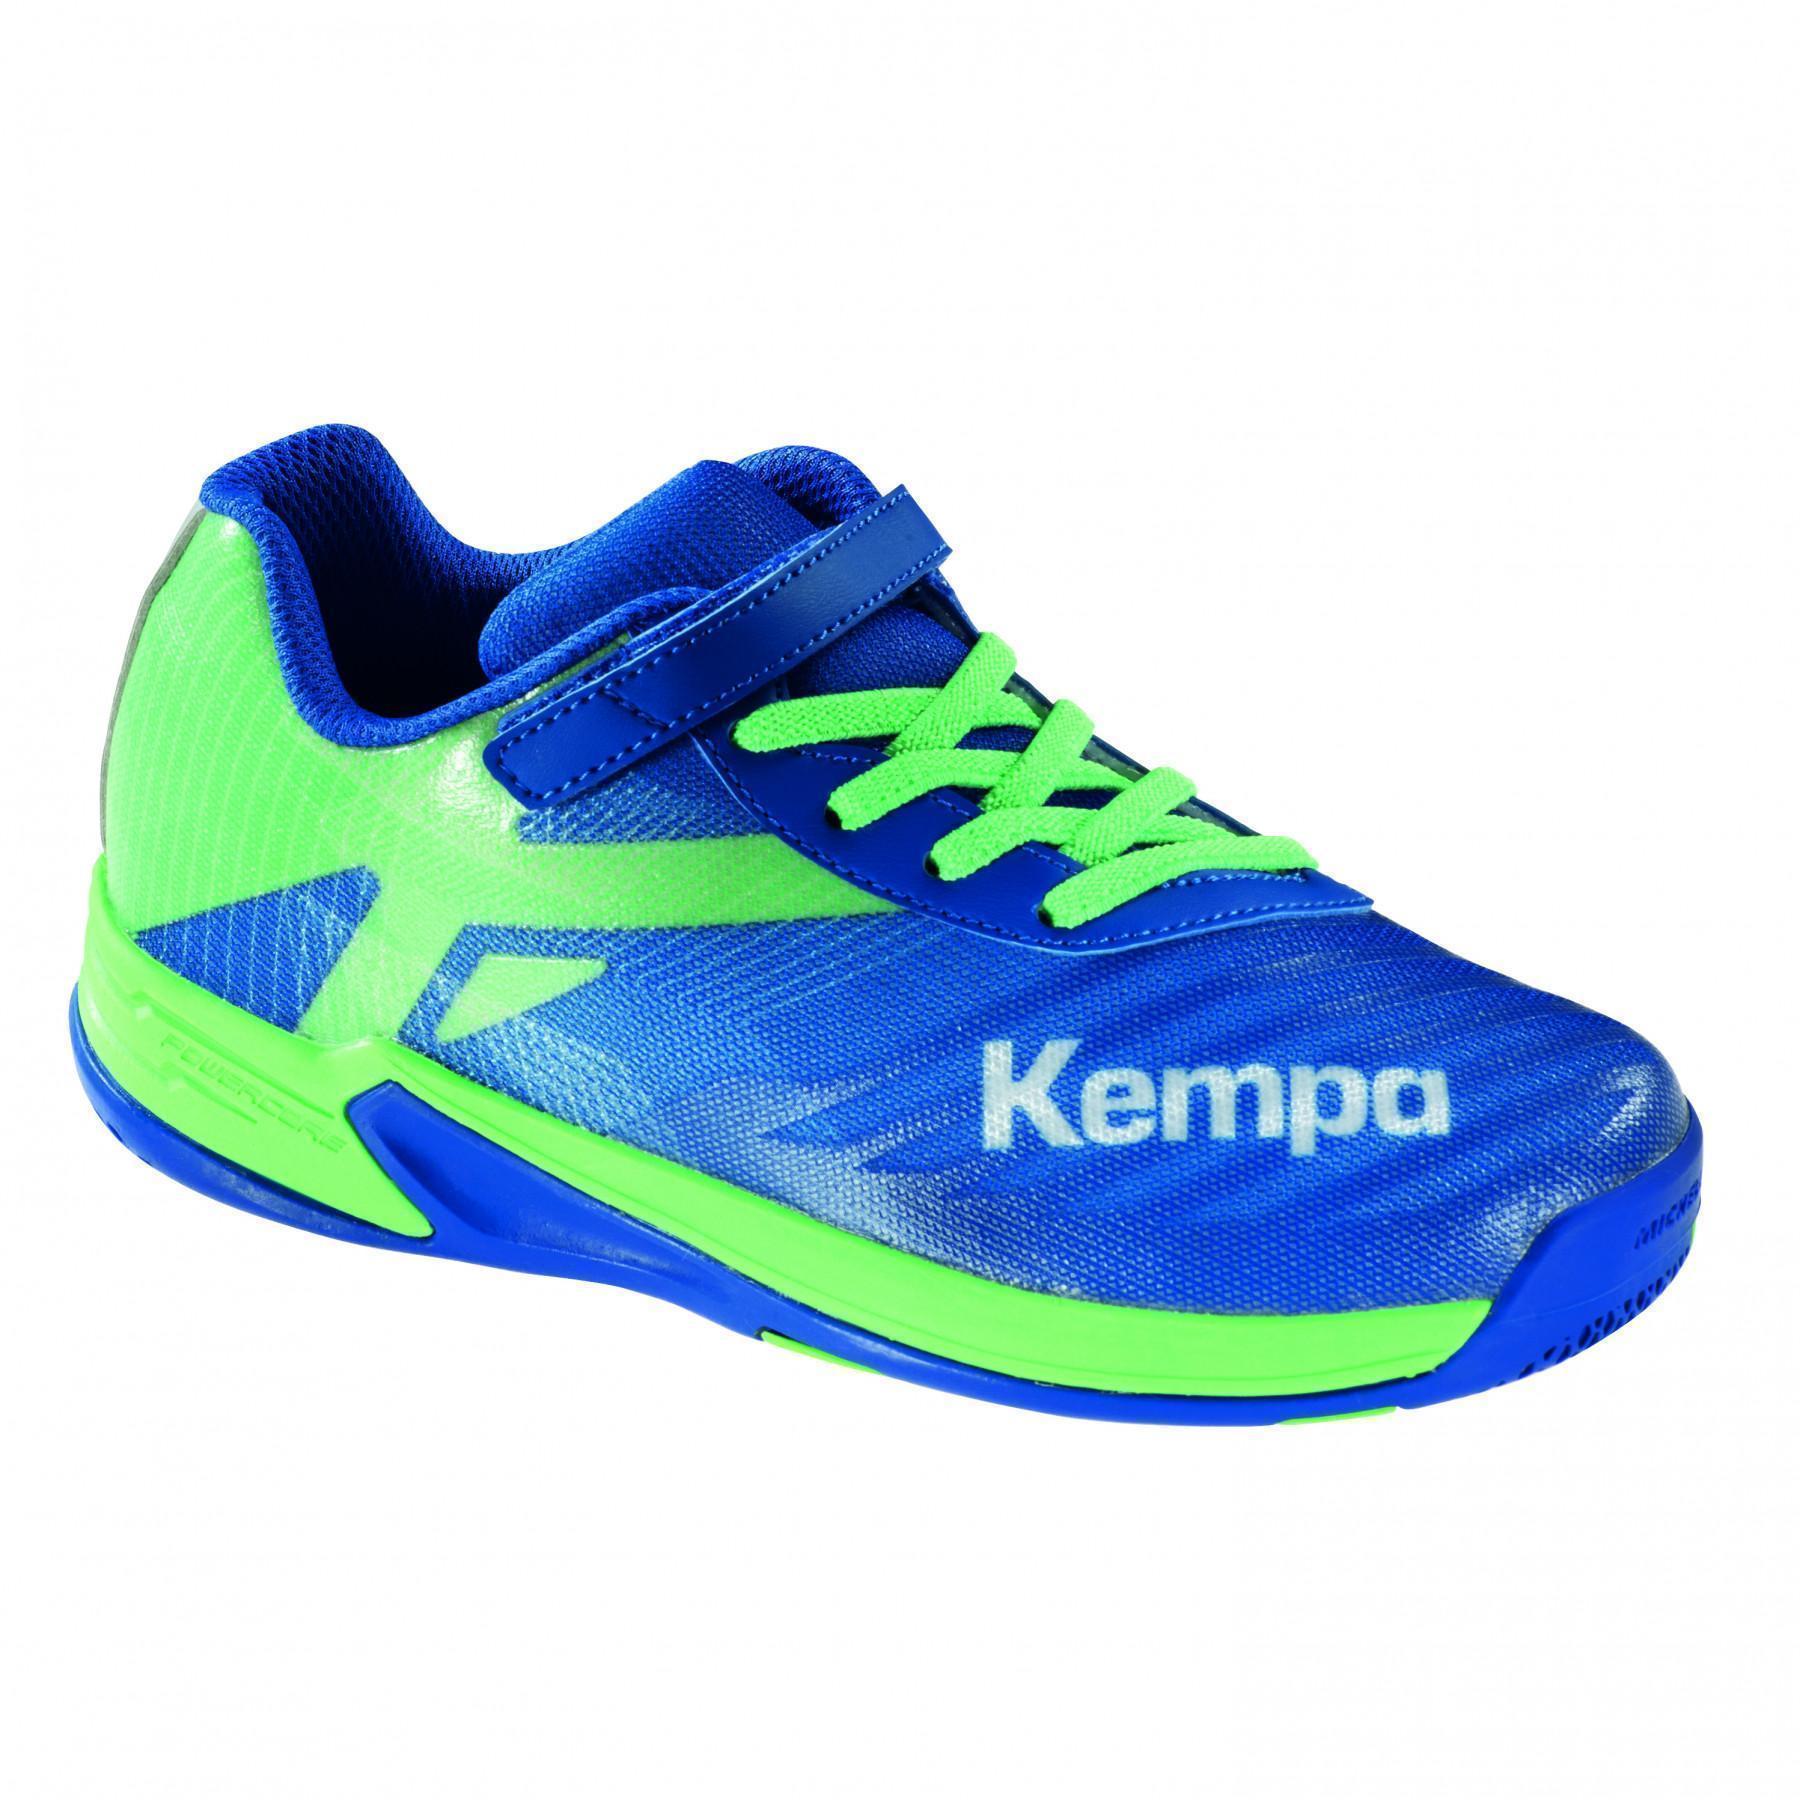 Kinderschoen zonder klittenband wing 2.0 Kempa